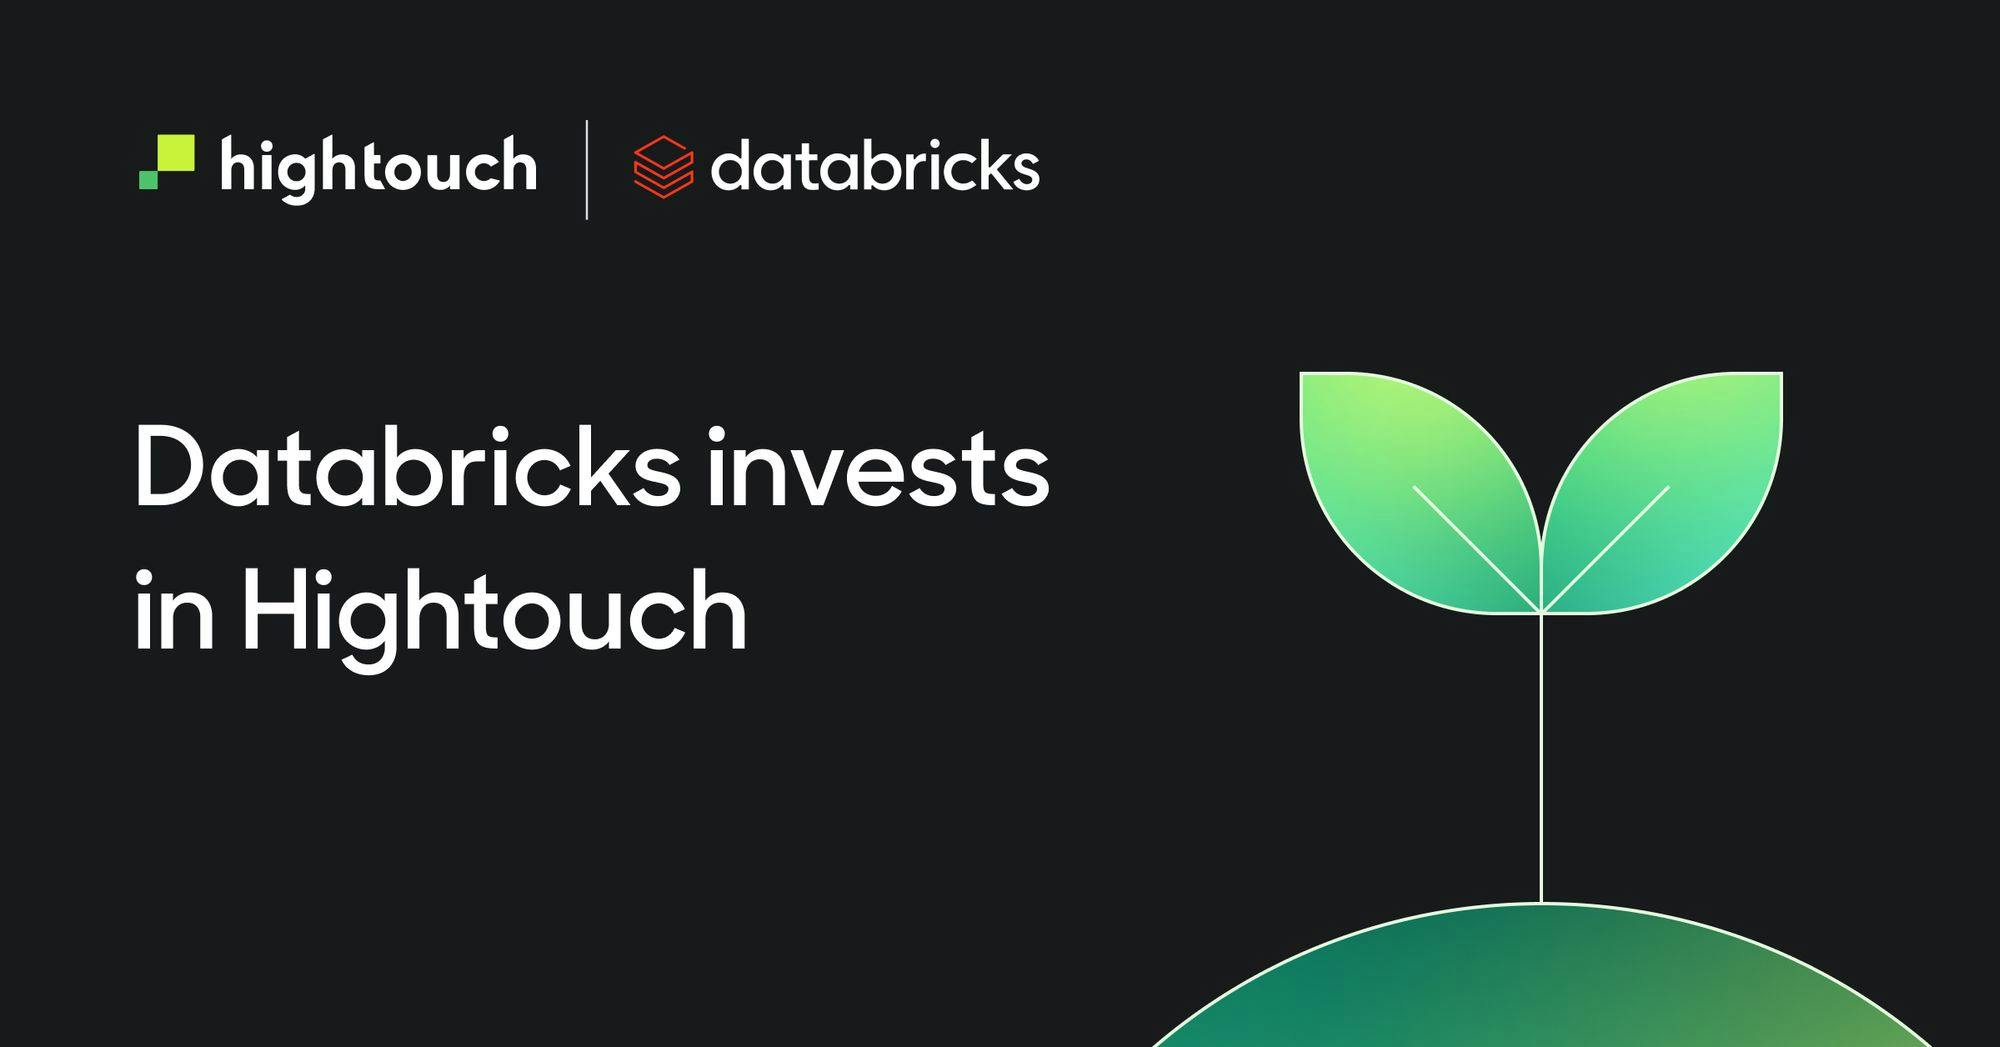 Databricks Invests in Hightouch